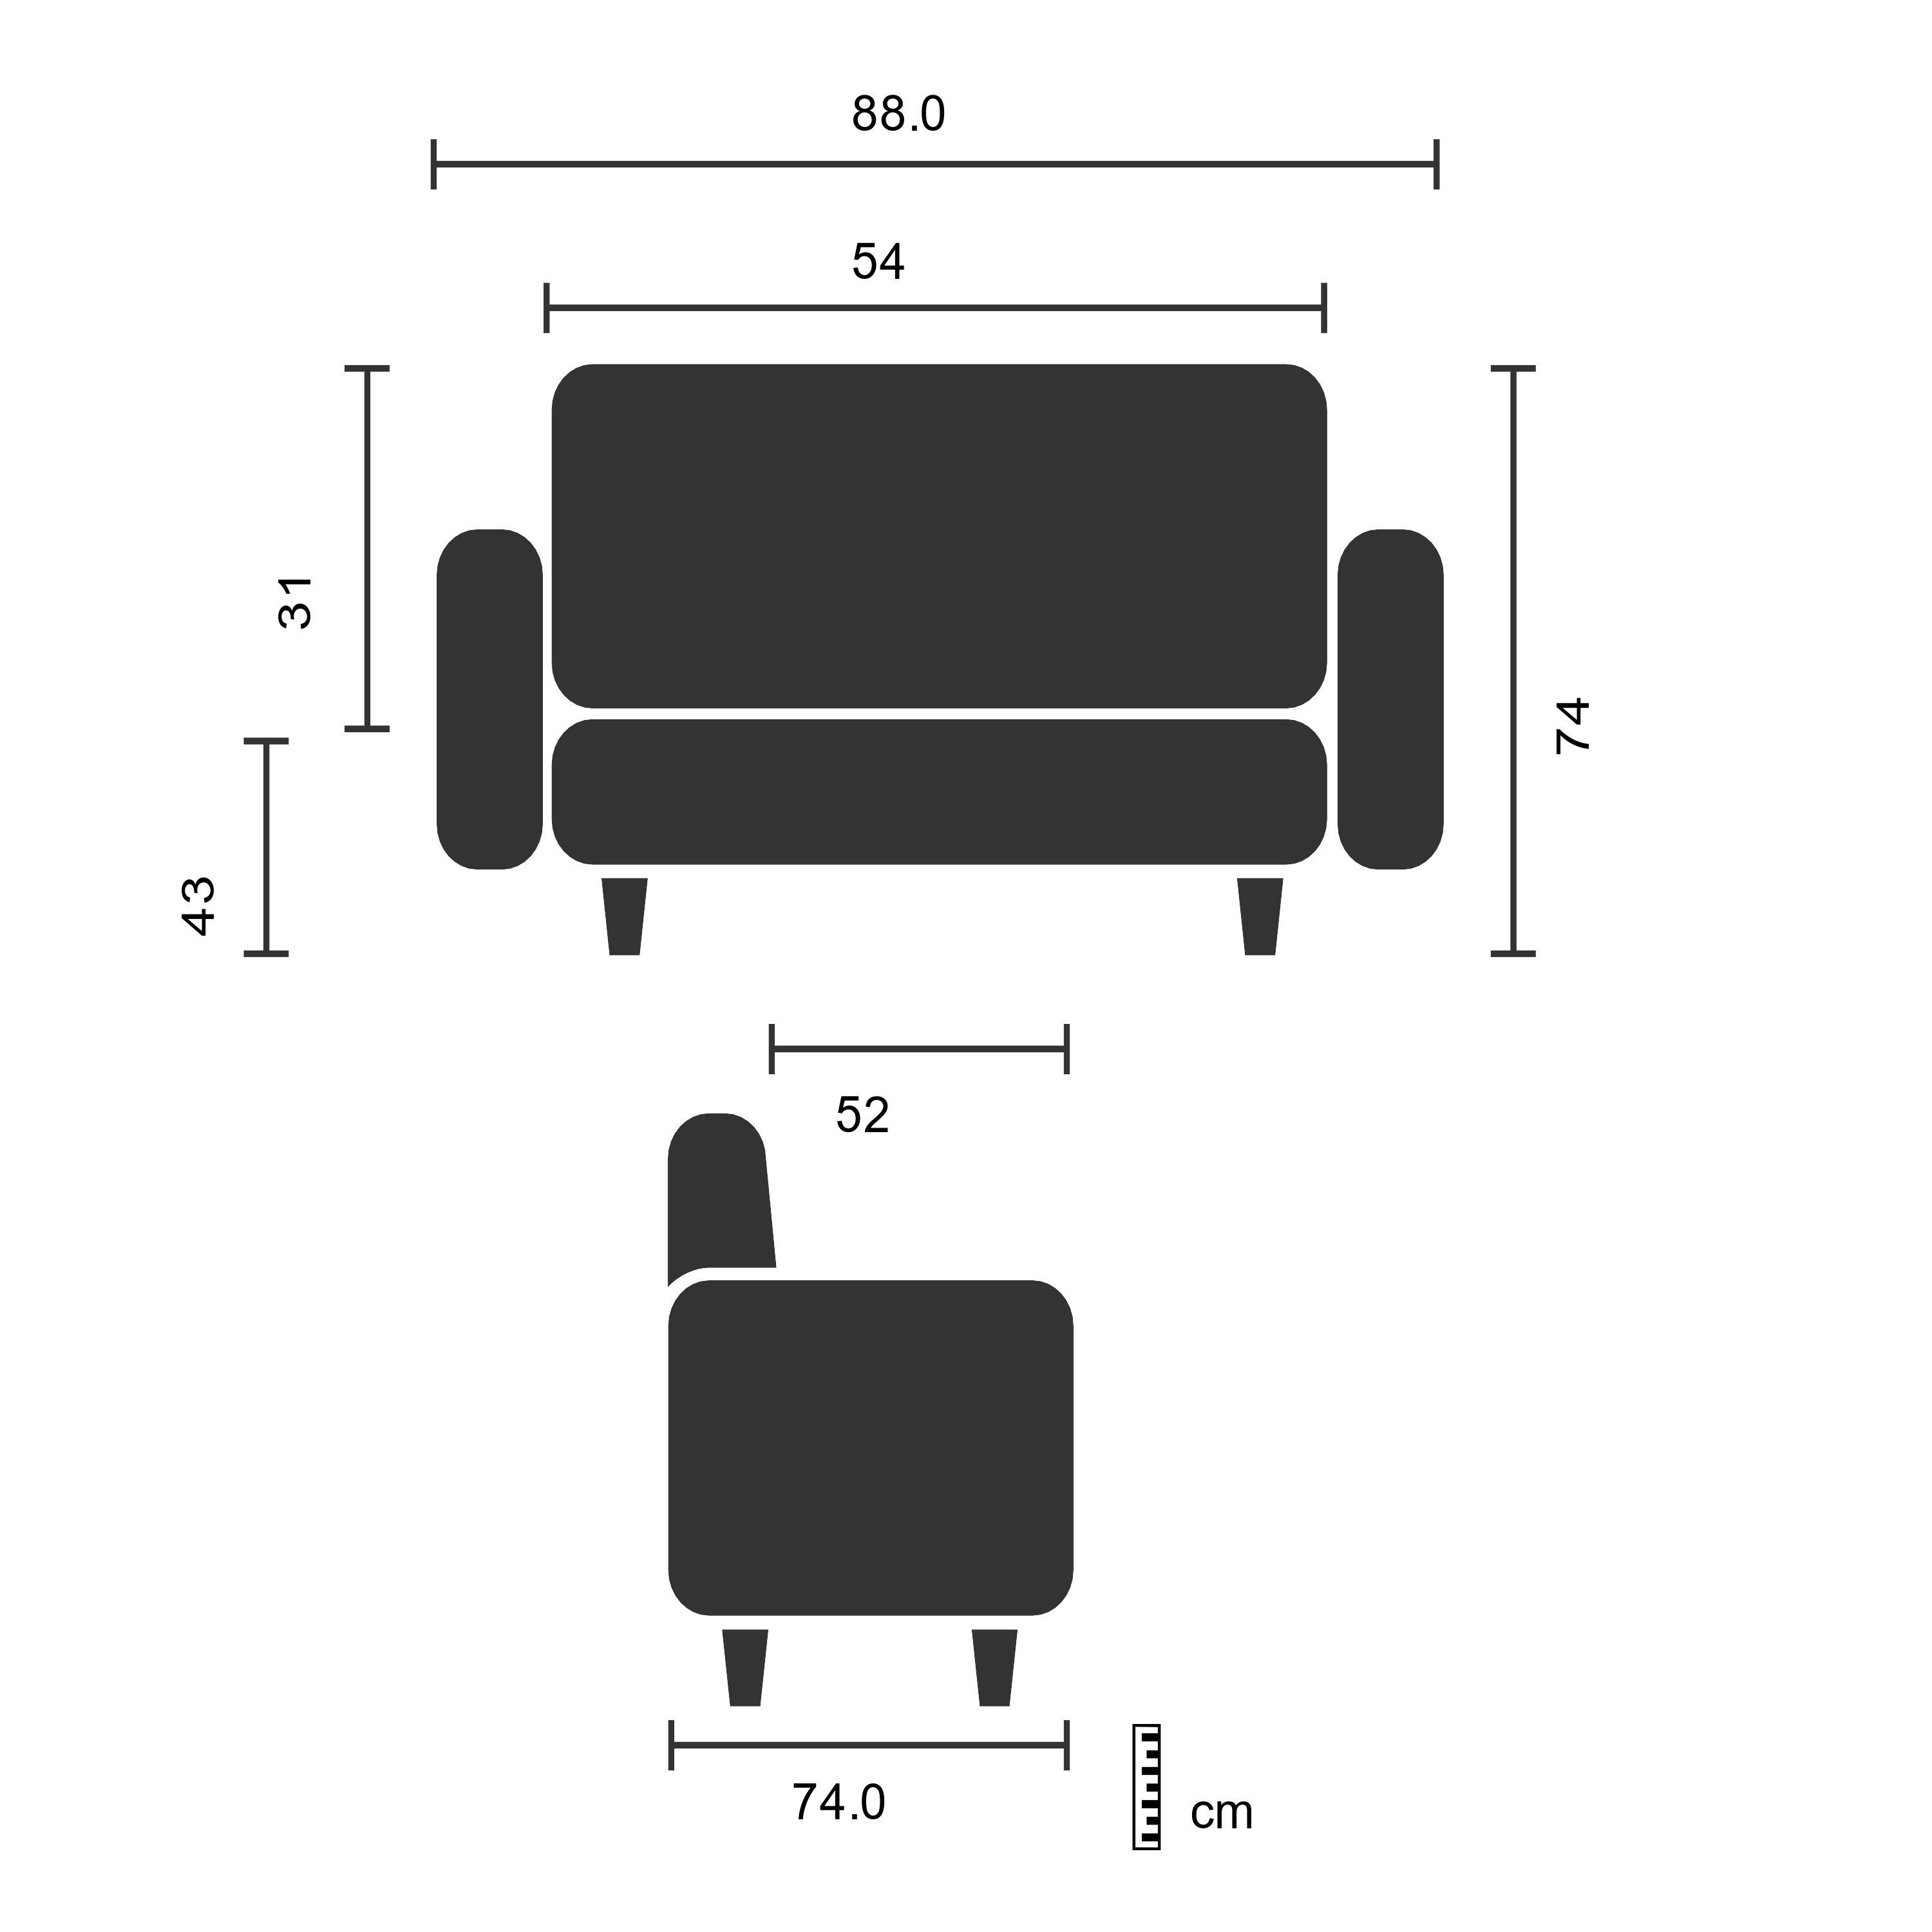 CURACAO Loungesessel Weiß Sessel Polstersessel | Kunstleder hjh Weiß mit OFFICE Armlehnen,